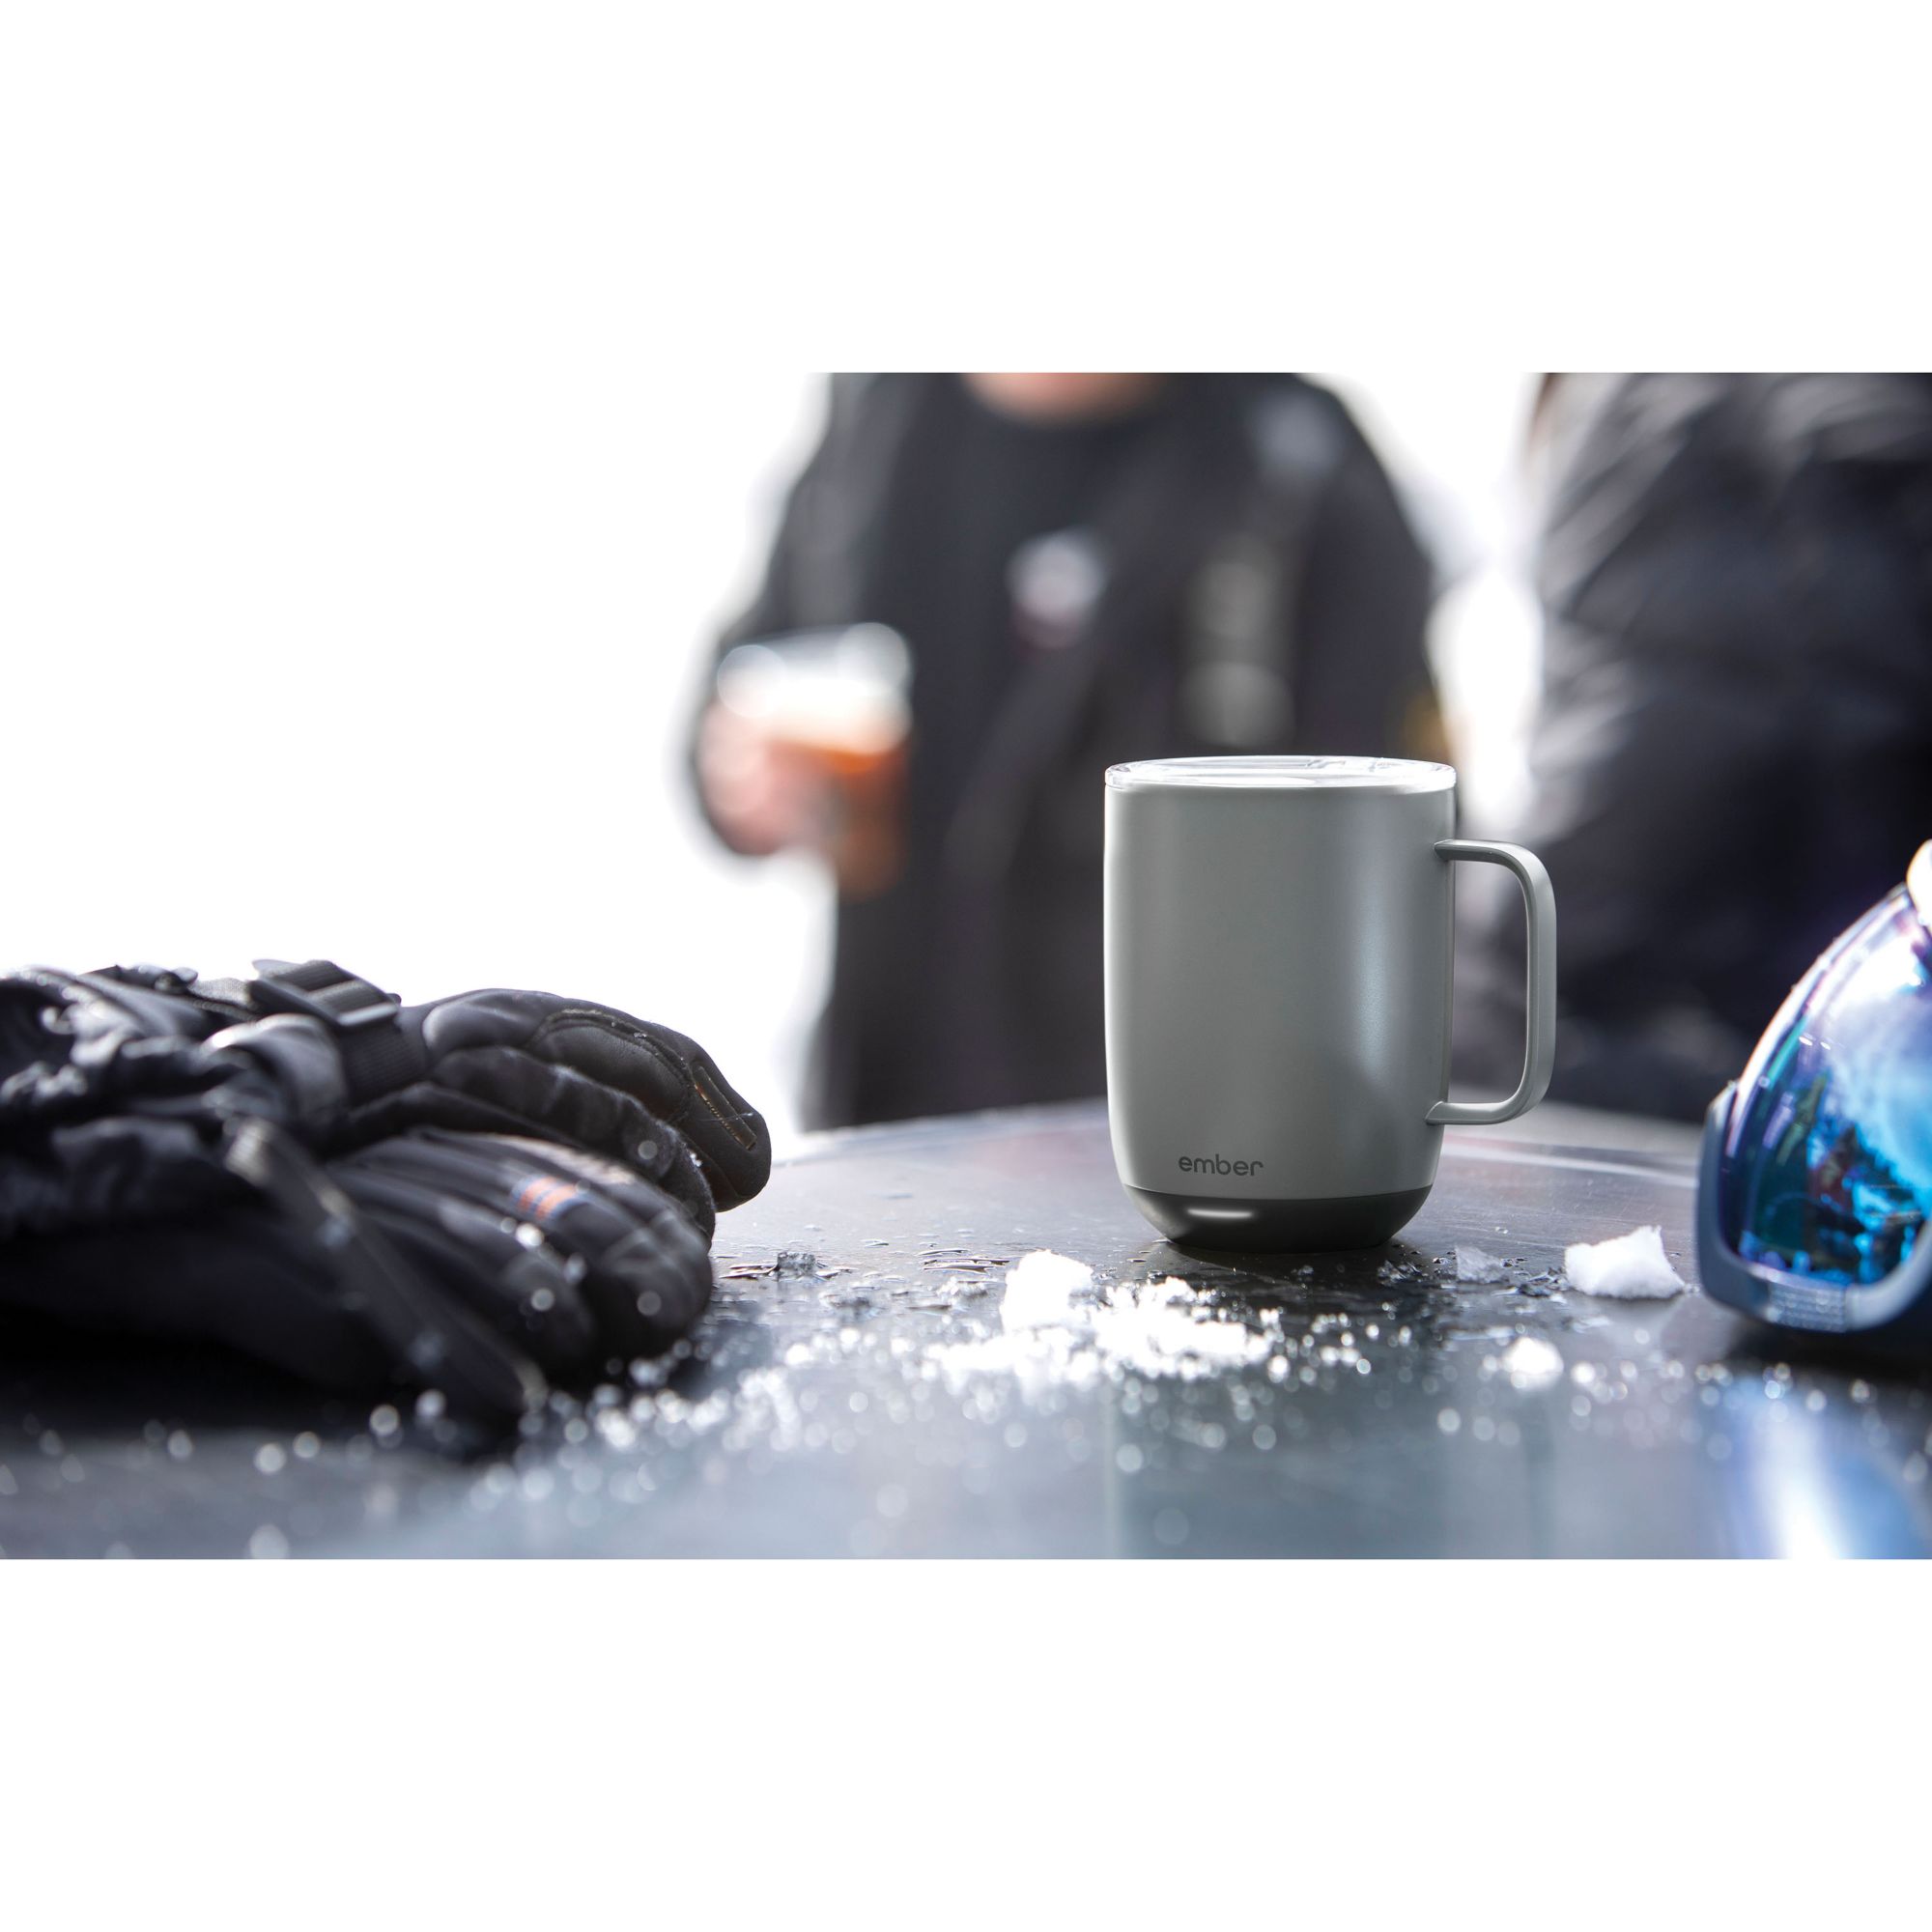 Ember 12 oz. Ember Travel Mug 2 Plus Temperature Control Smart Travel Mug in Black